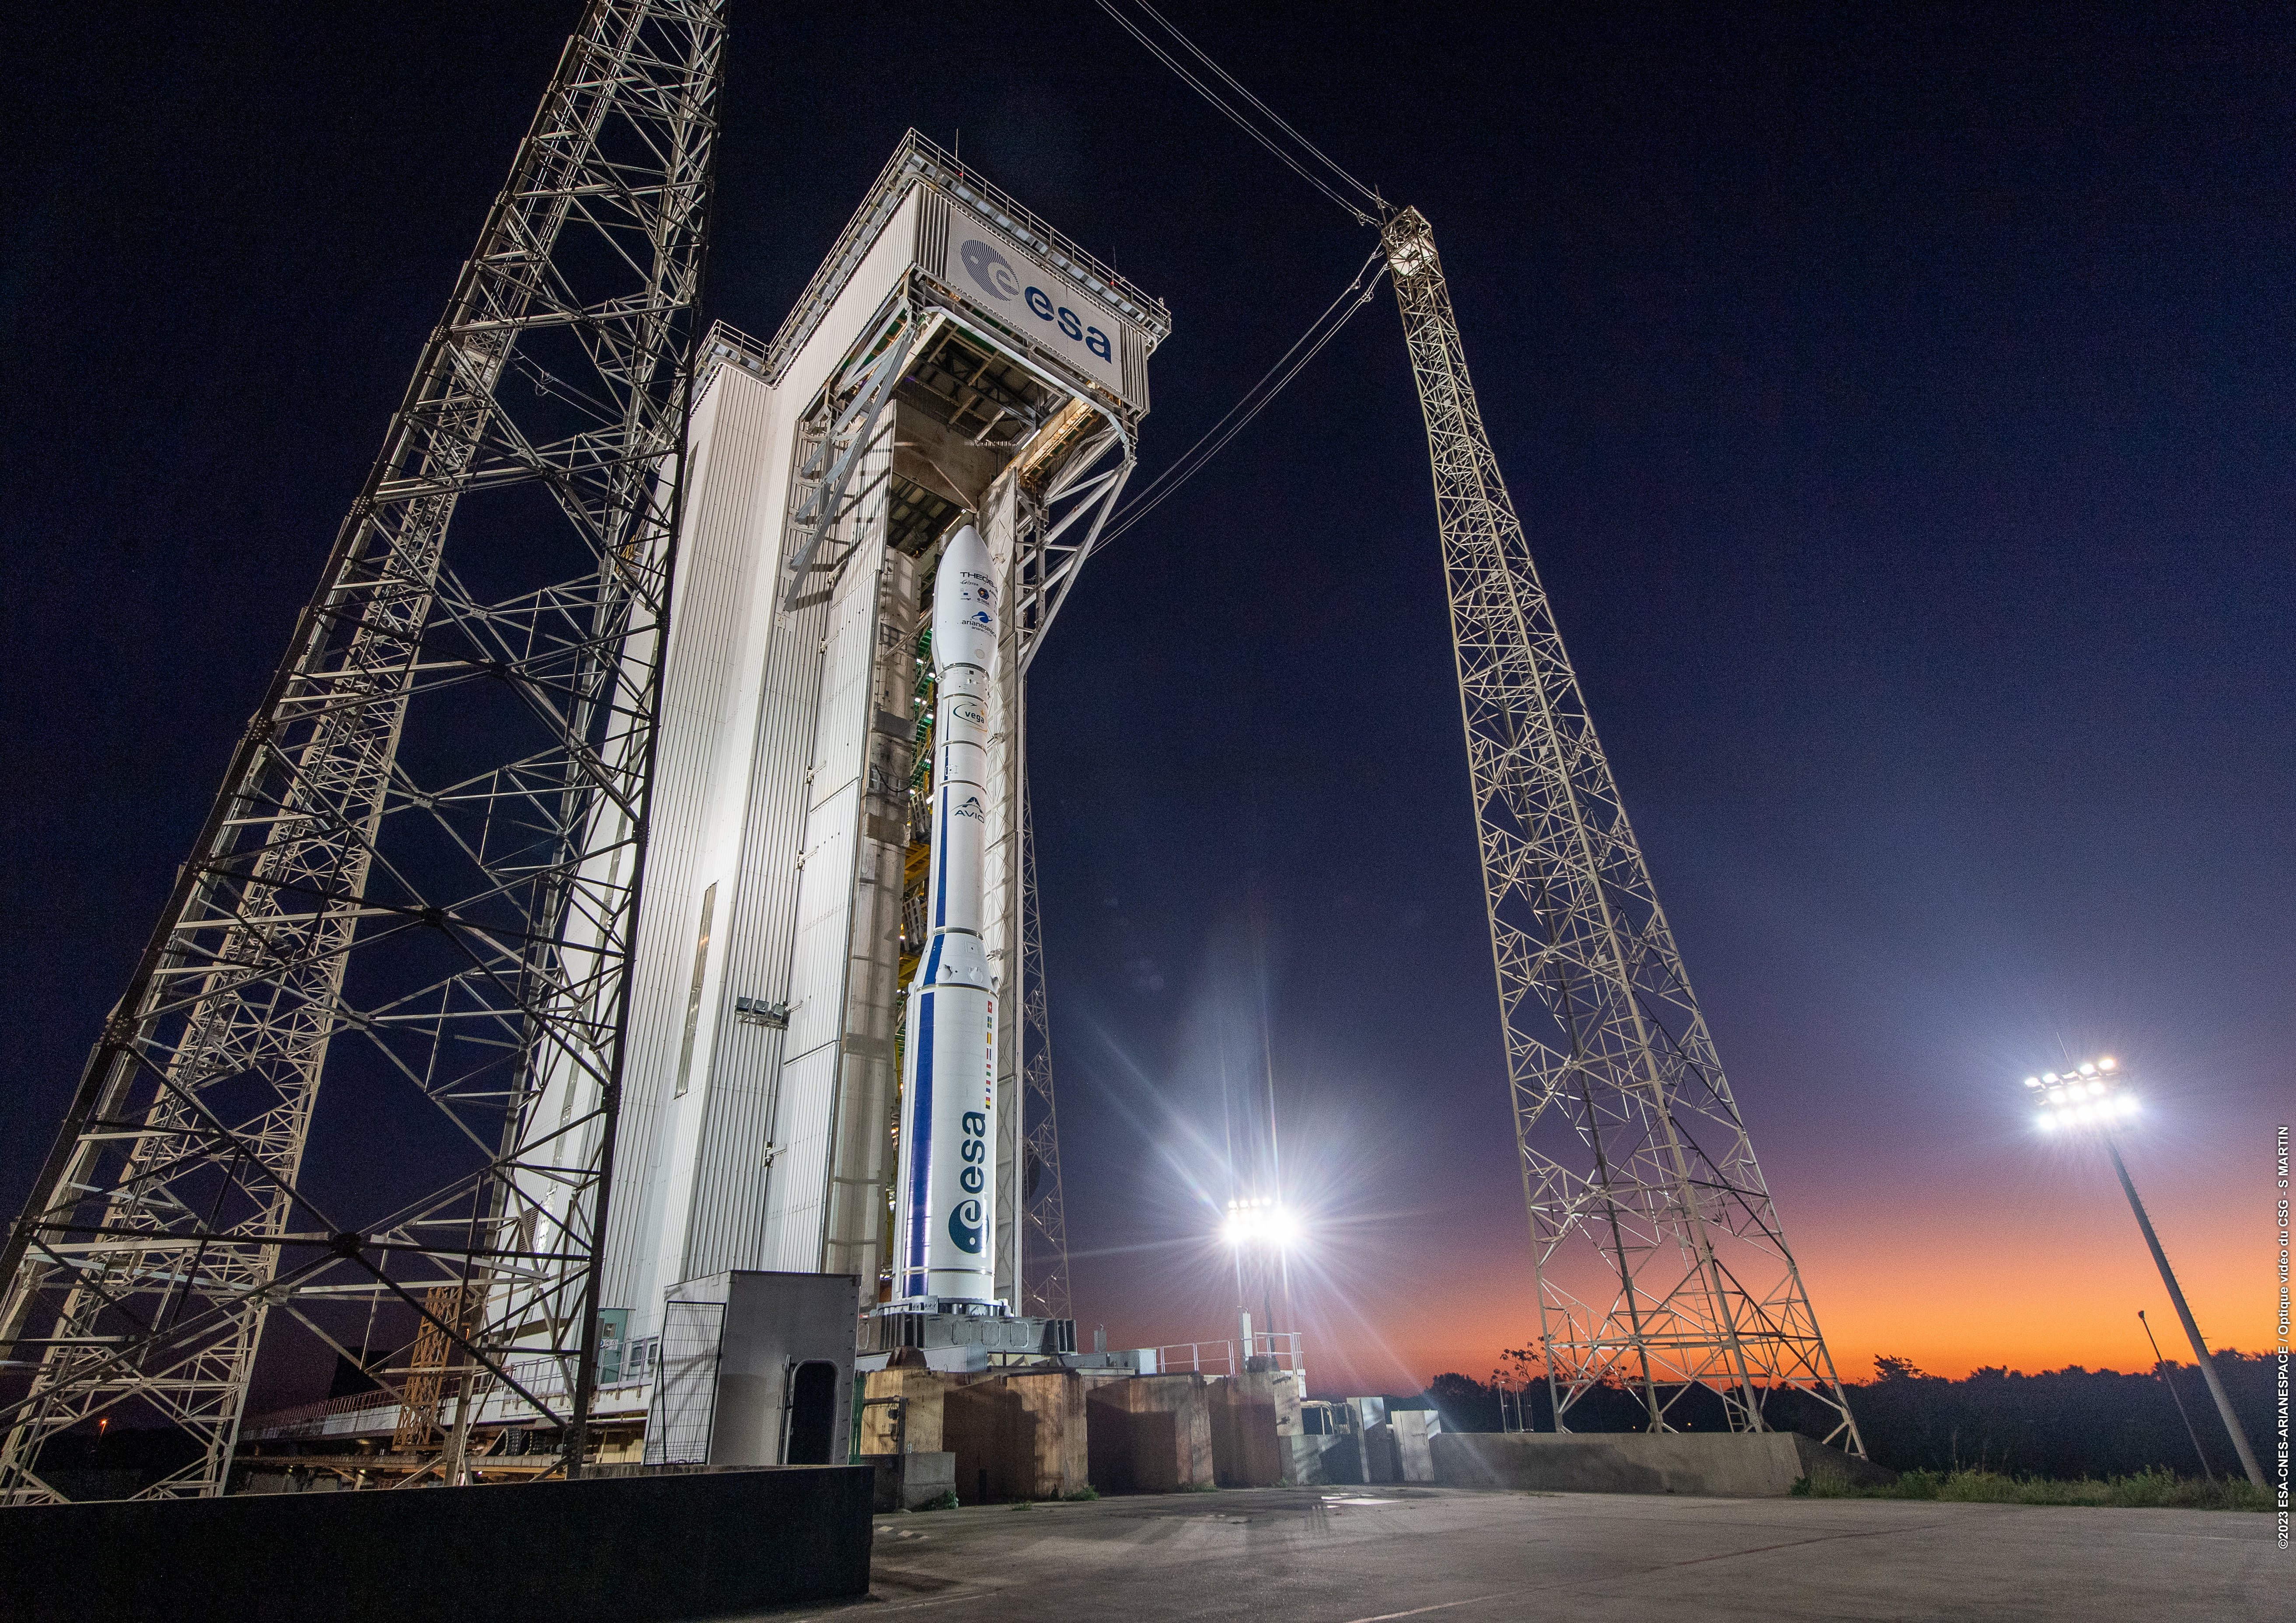 Vega rocket at the launchpad 